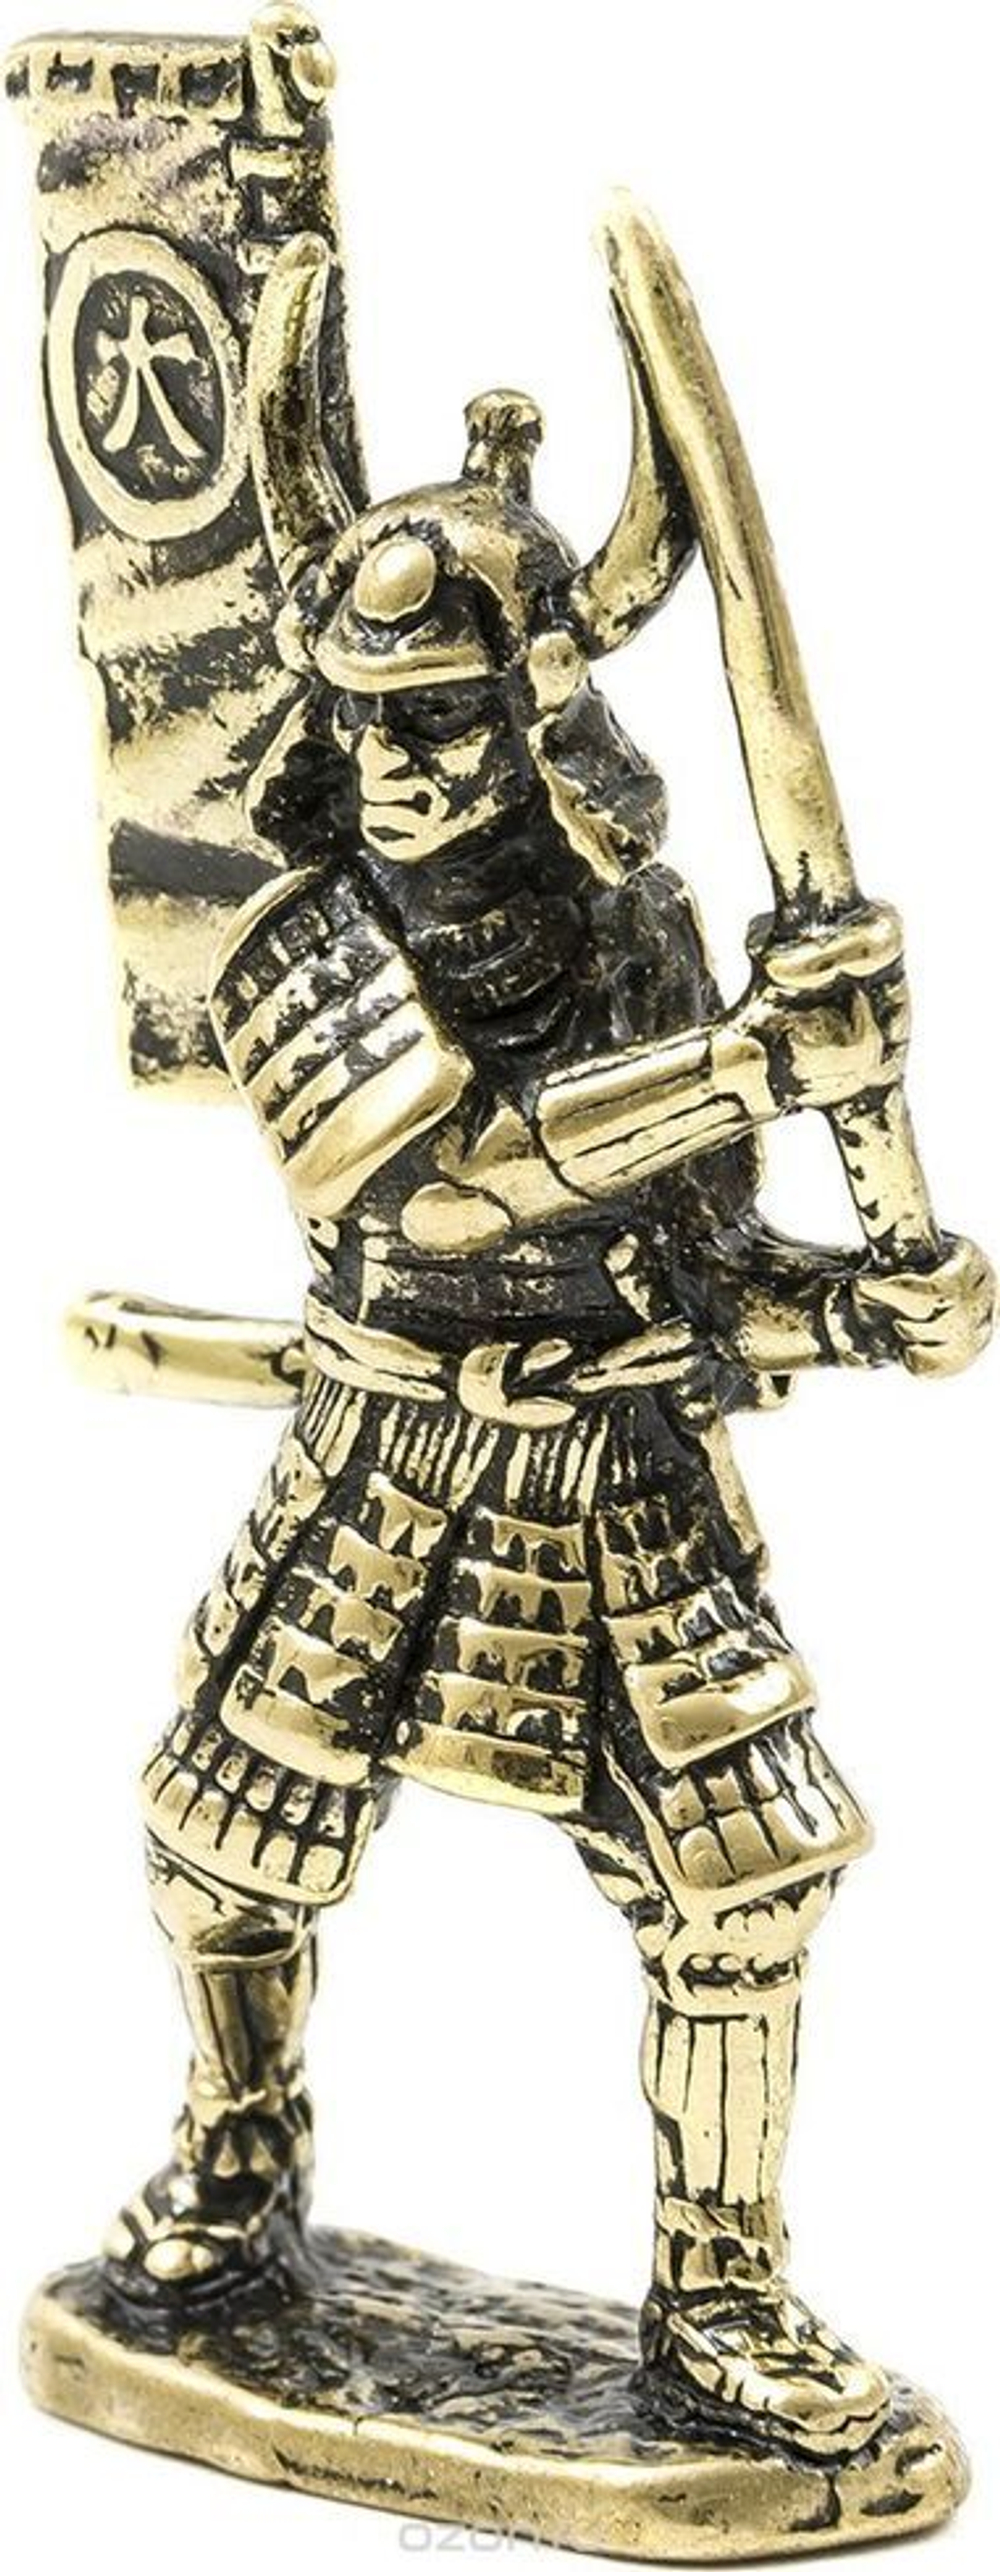 Фигурка Самураи Тайи, латунь. Игрушка литая металлическая 54 мм (1:32)